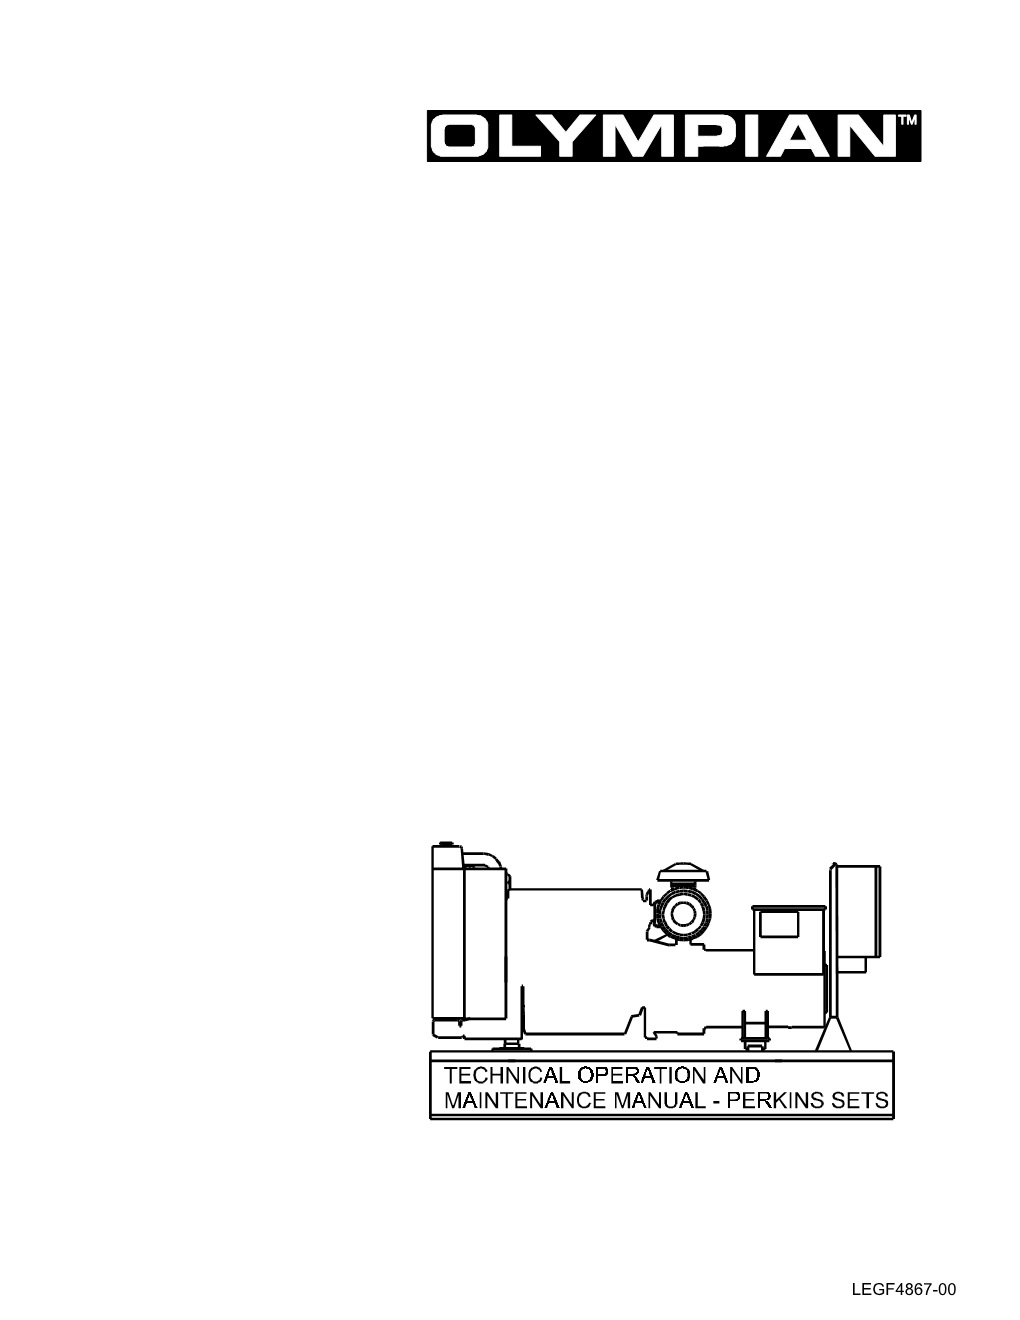 Generator Set Technical Operation and Maintenance Manual